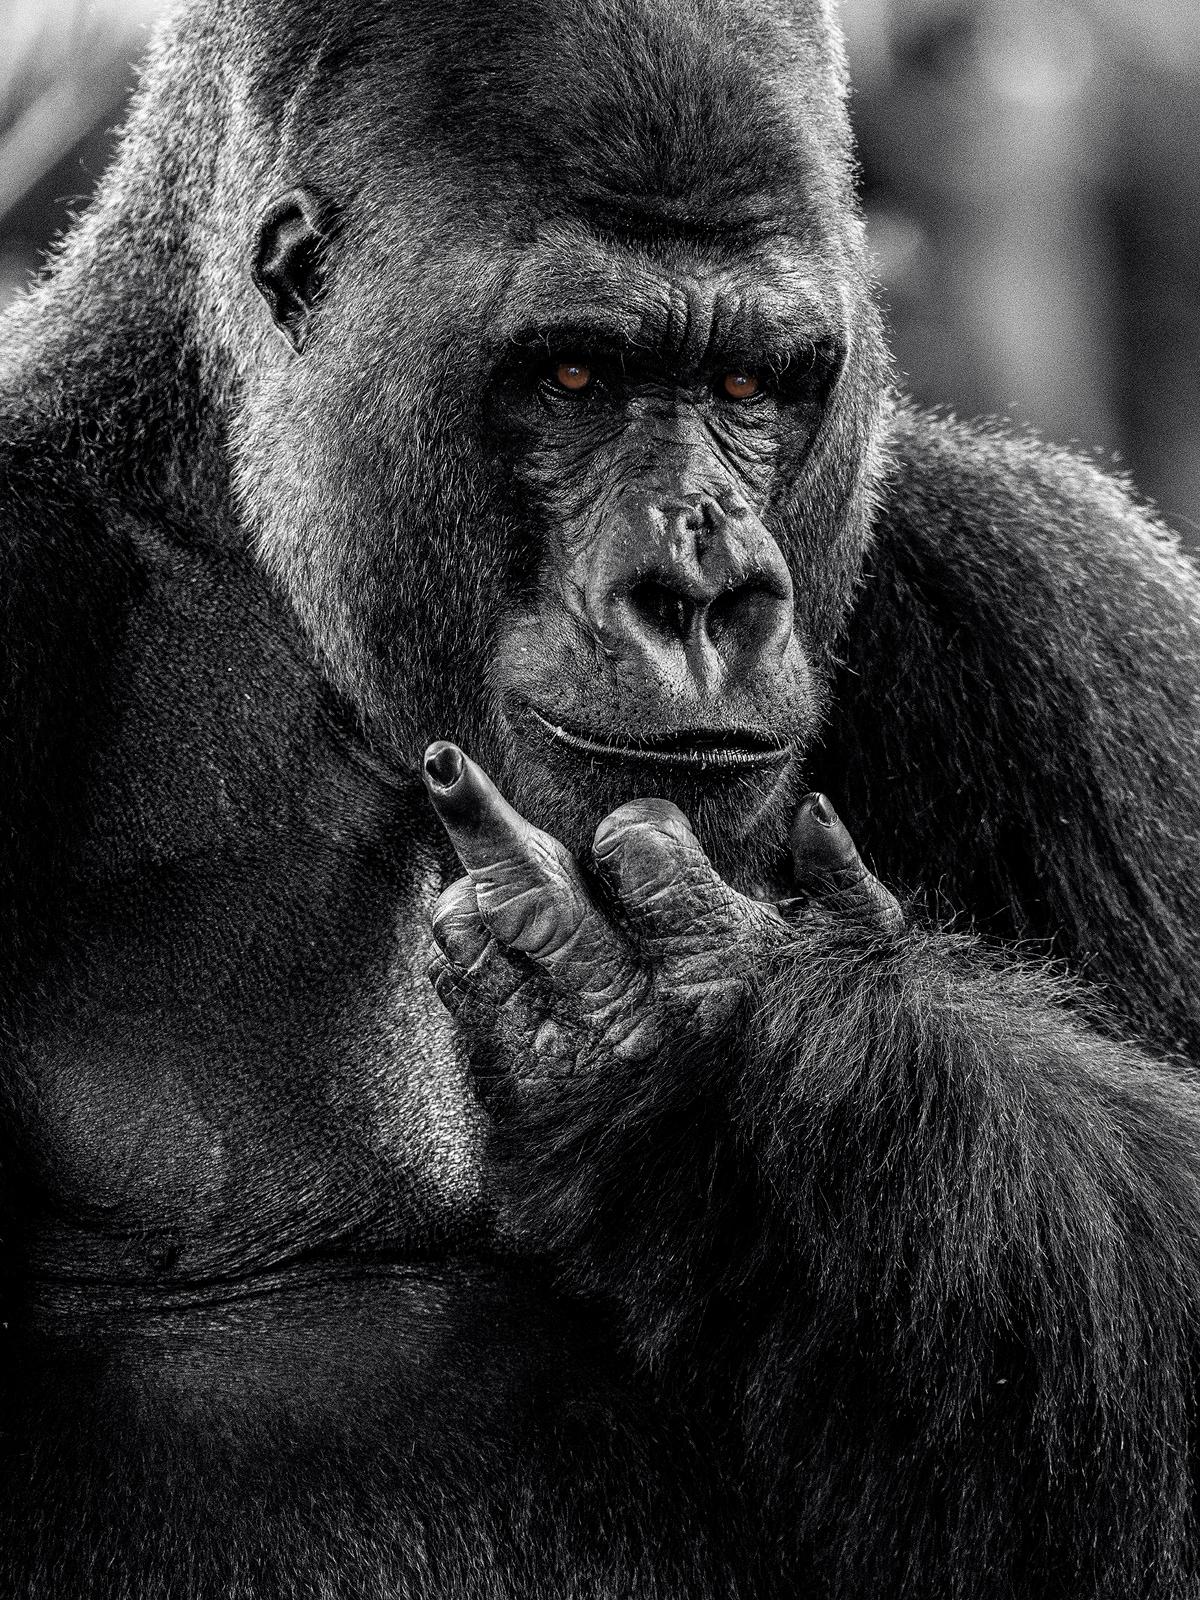 Black and White Photograph Gürdal Bibo - « NY Attitude » - Photographie de faune noire et blanche, Gorilla in Africa